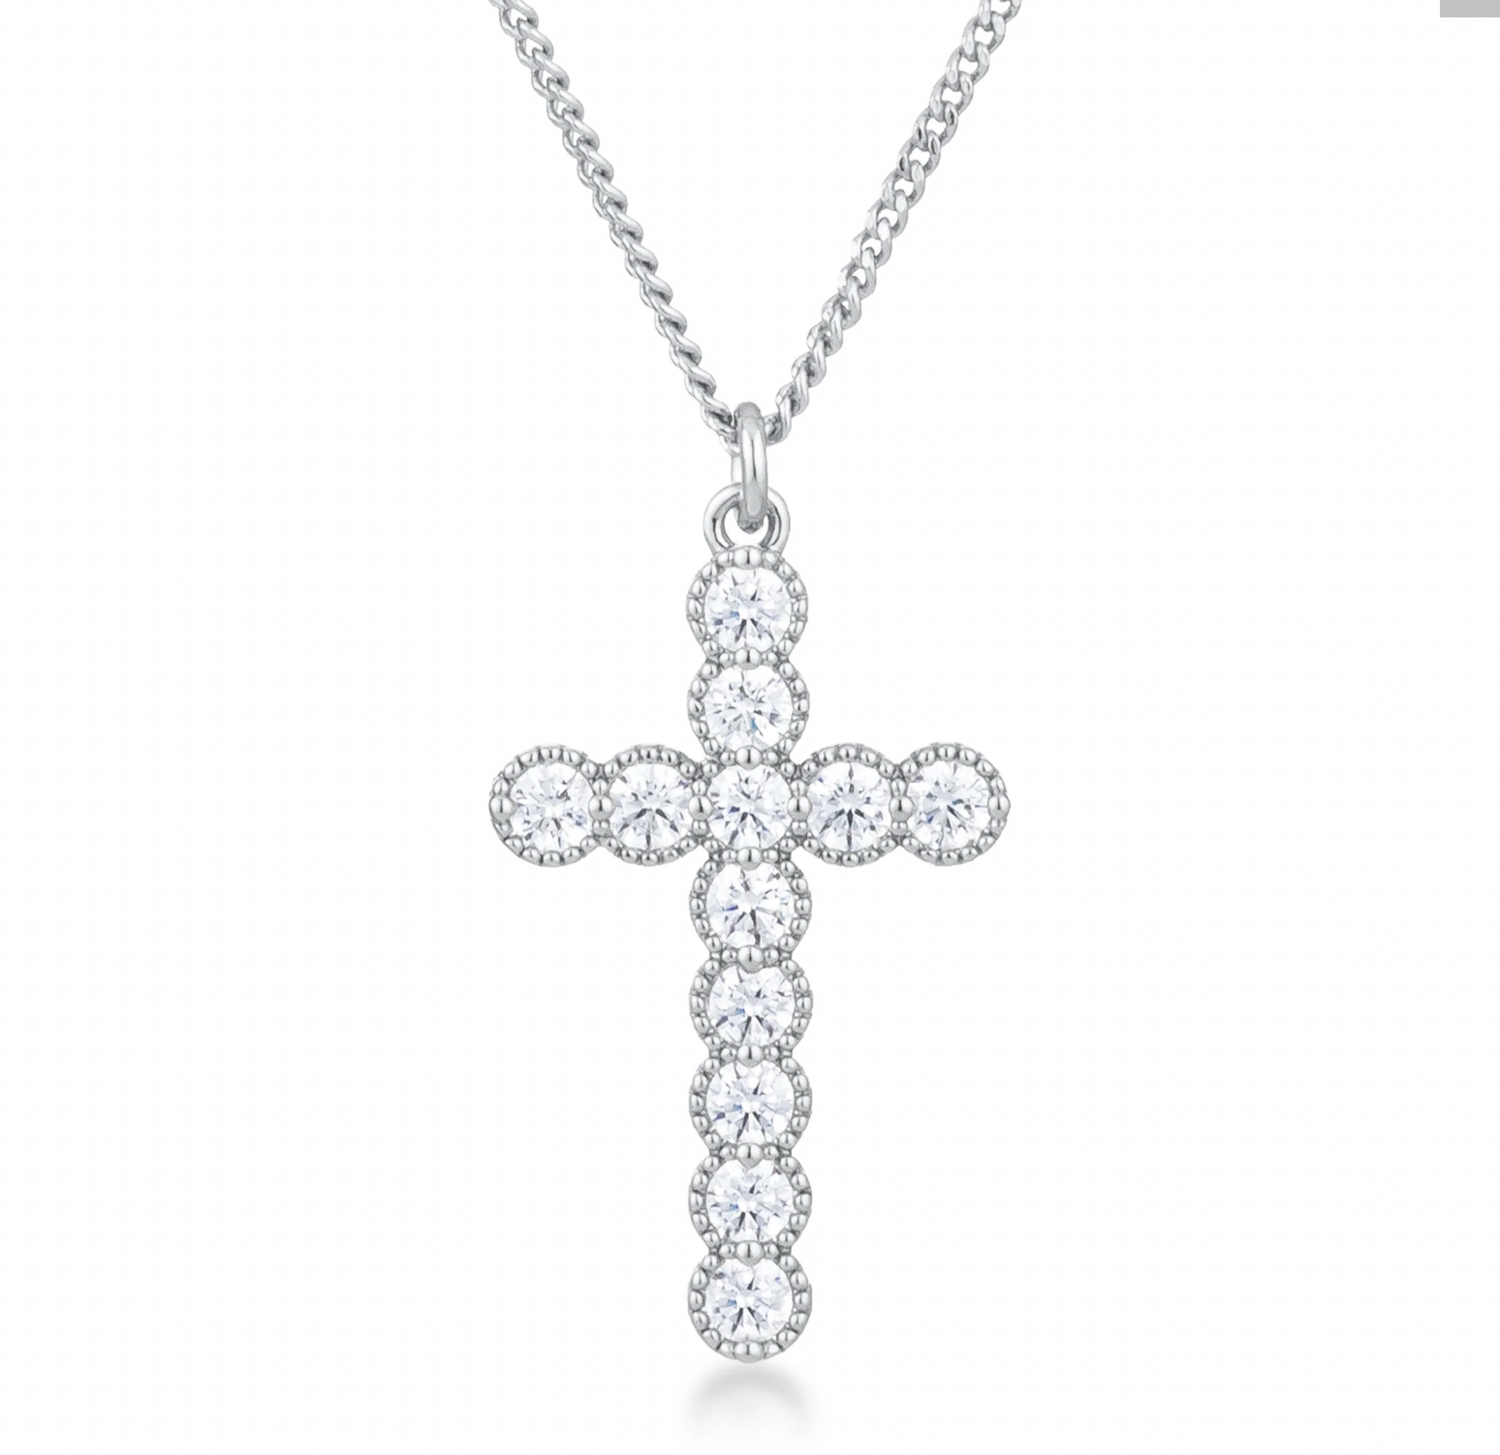 Silvertone Cross Necklace